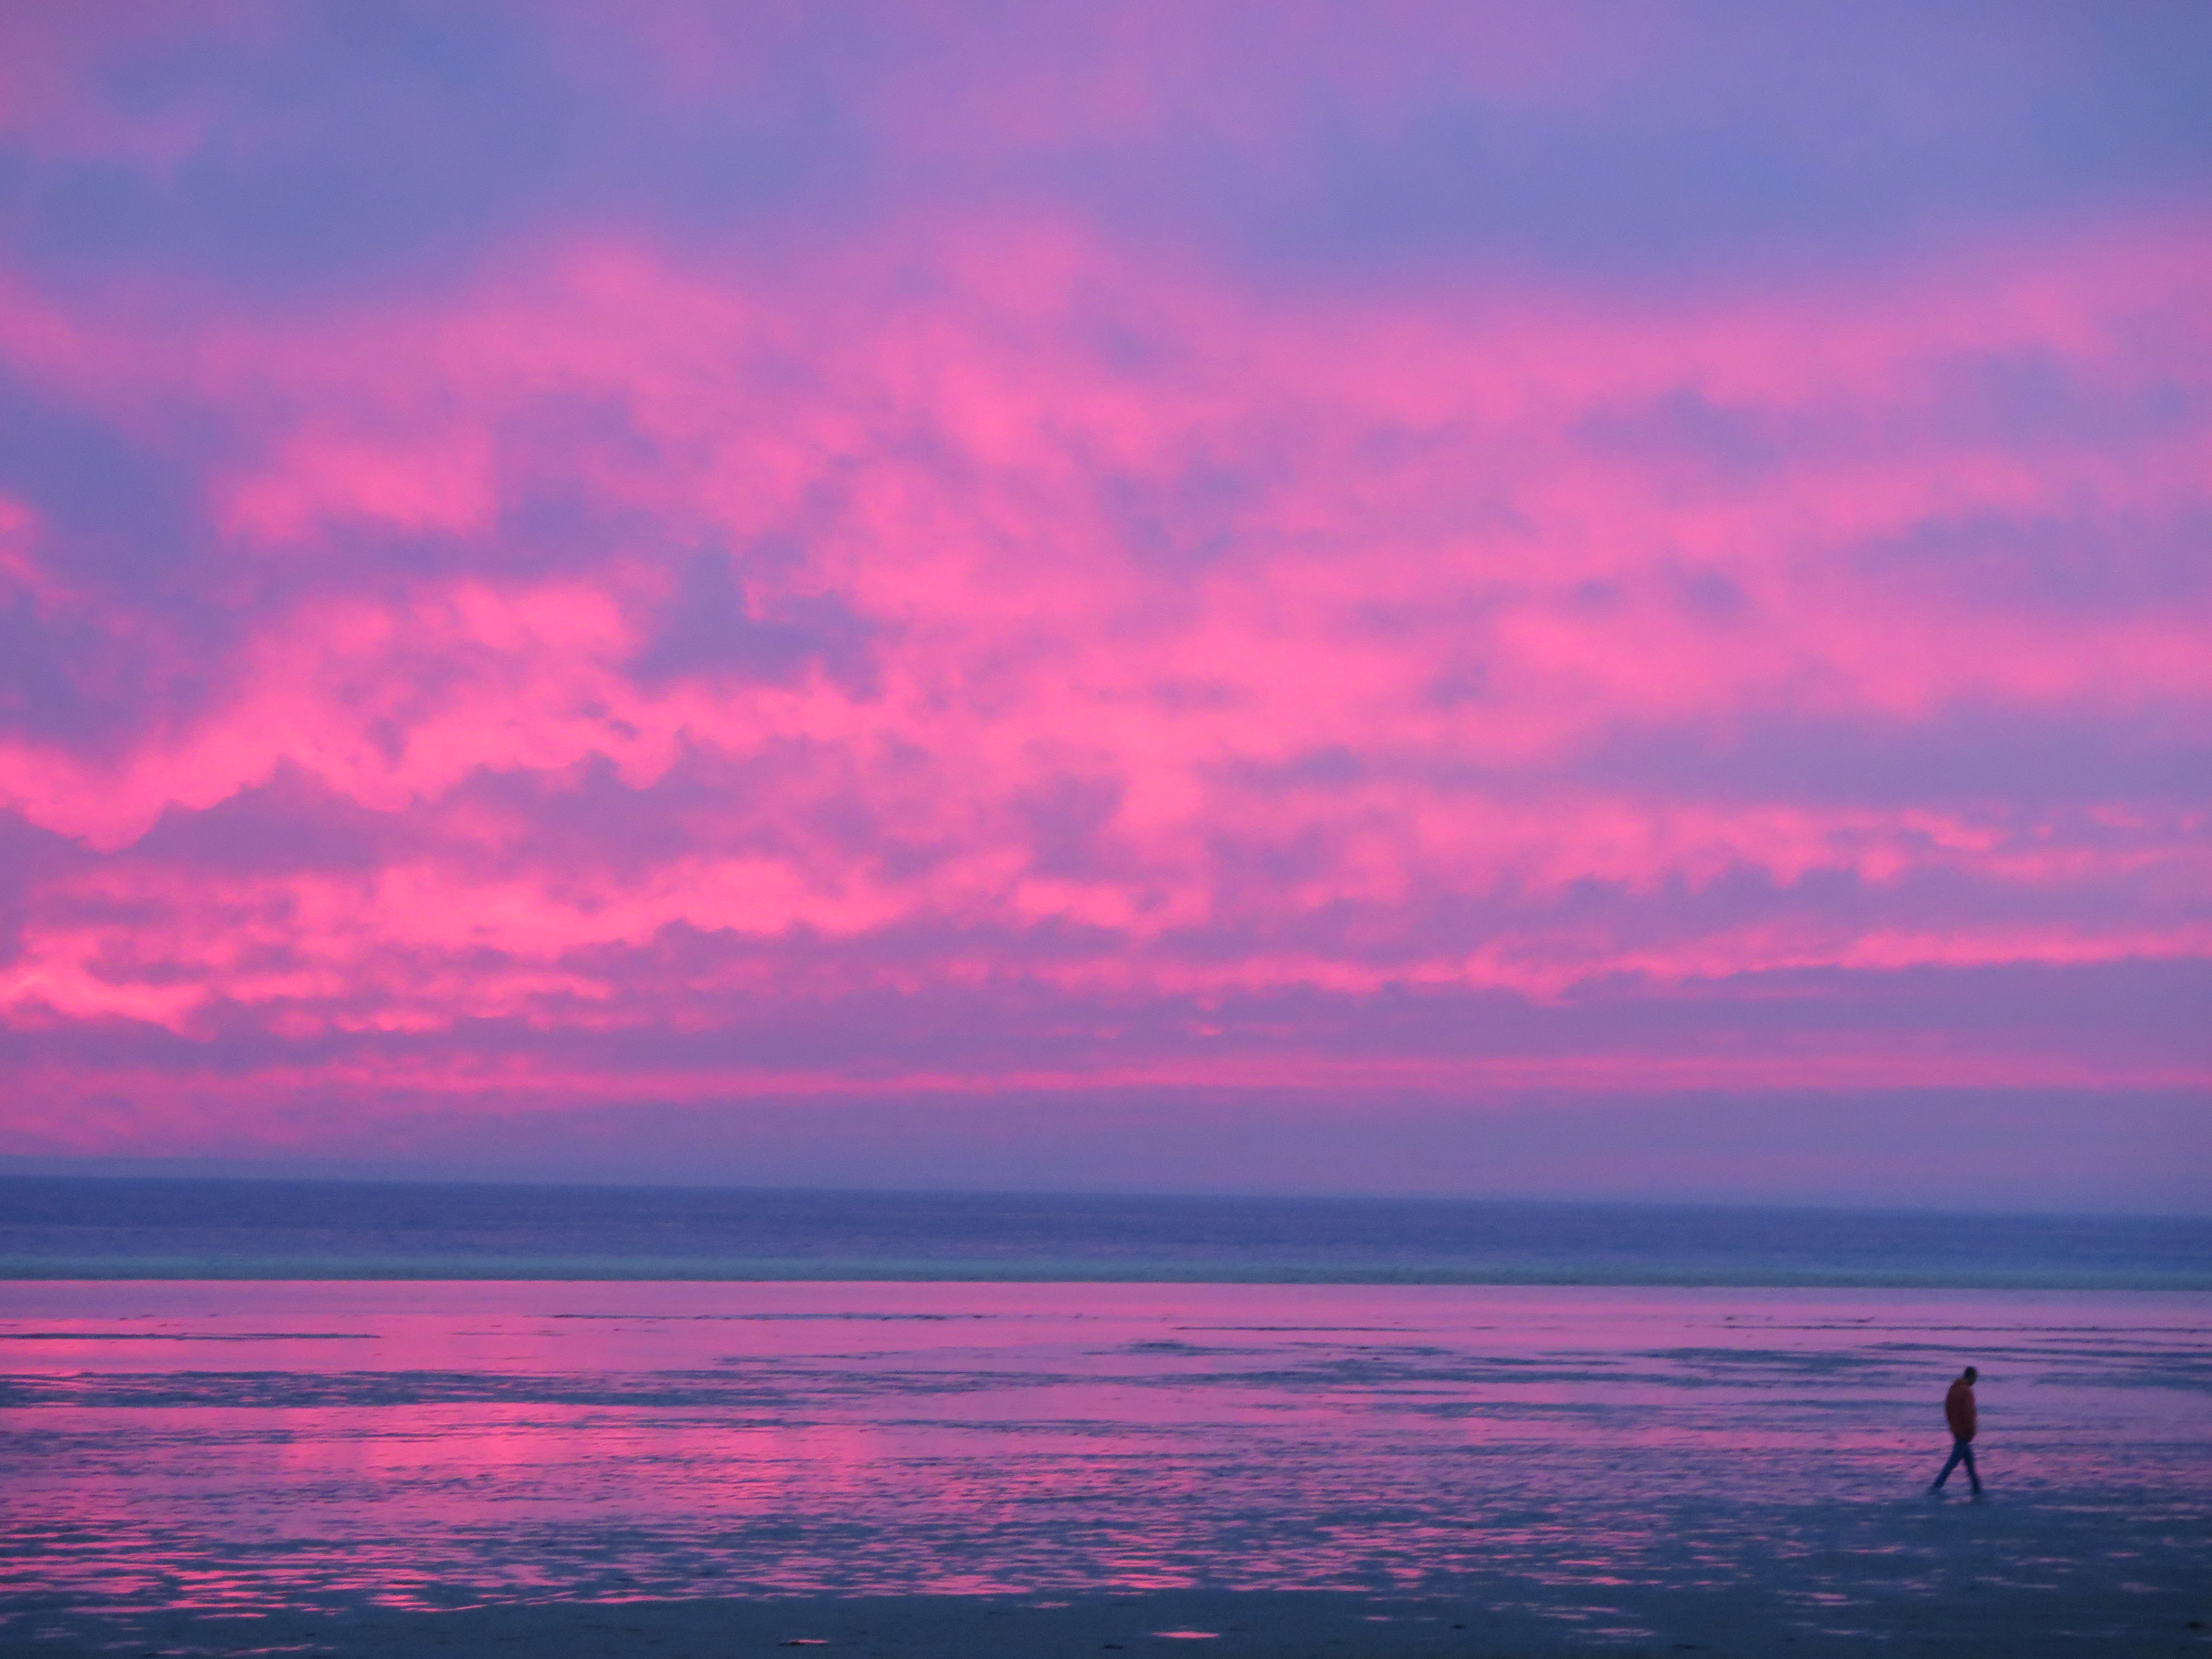 Tarifa sunset with walker on the beach